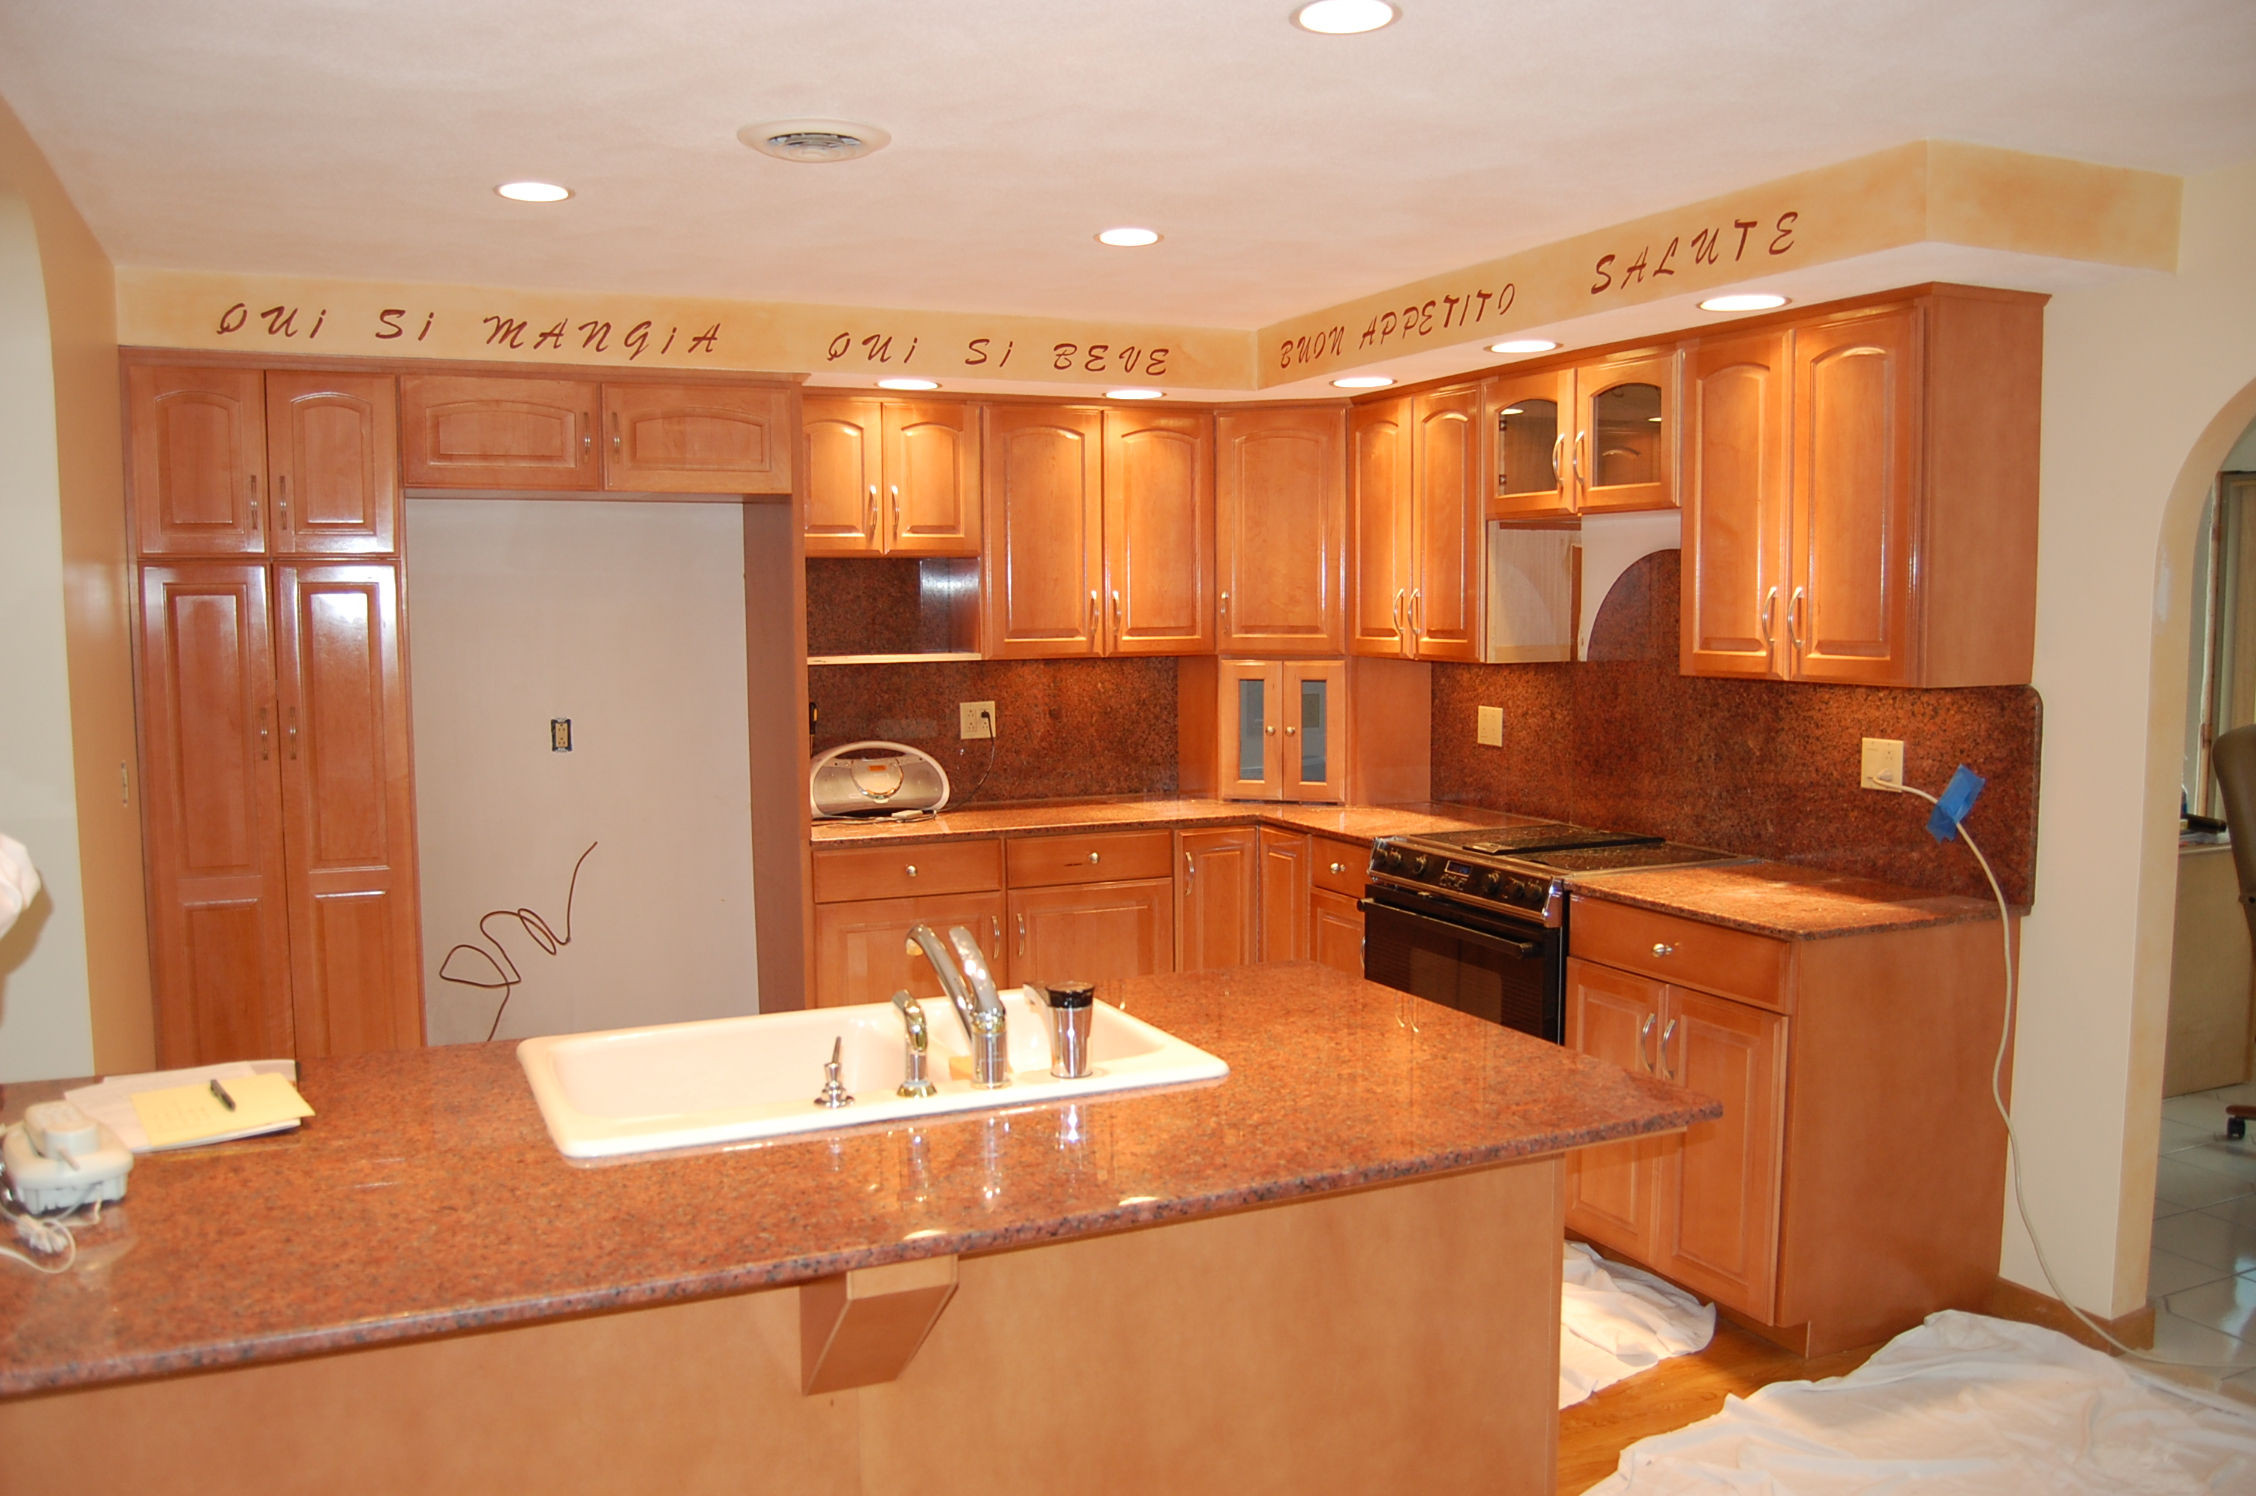 Resurfacing Kitchen Cabinet Doors
 Minimize Costs by Doing Kitchen Cabinet Refacing